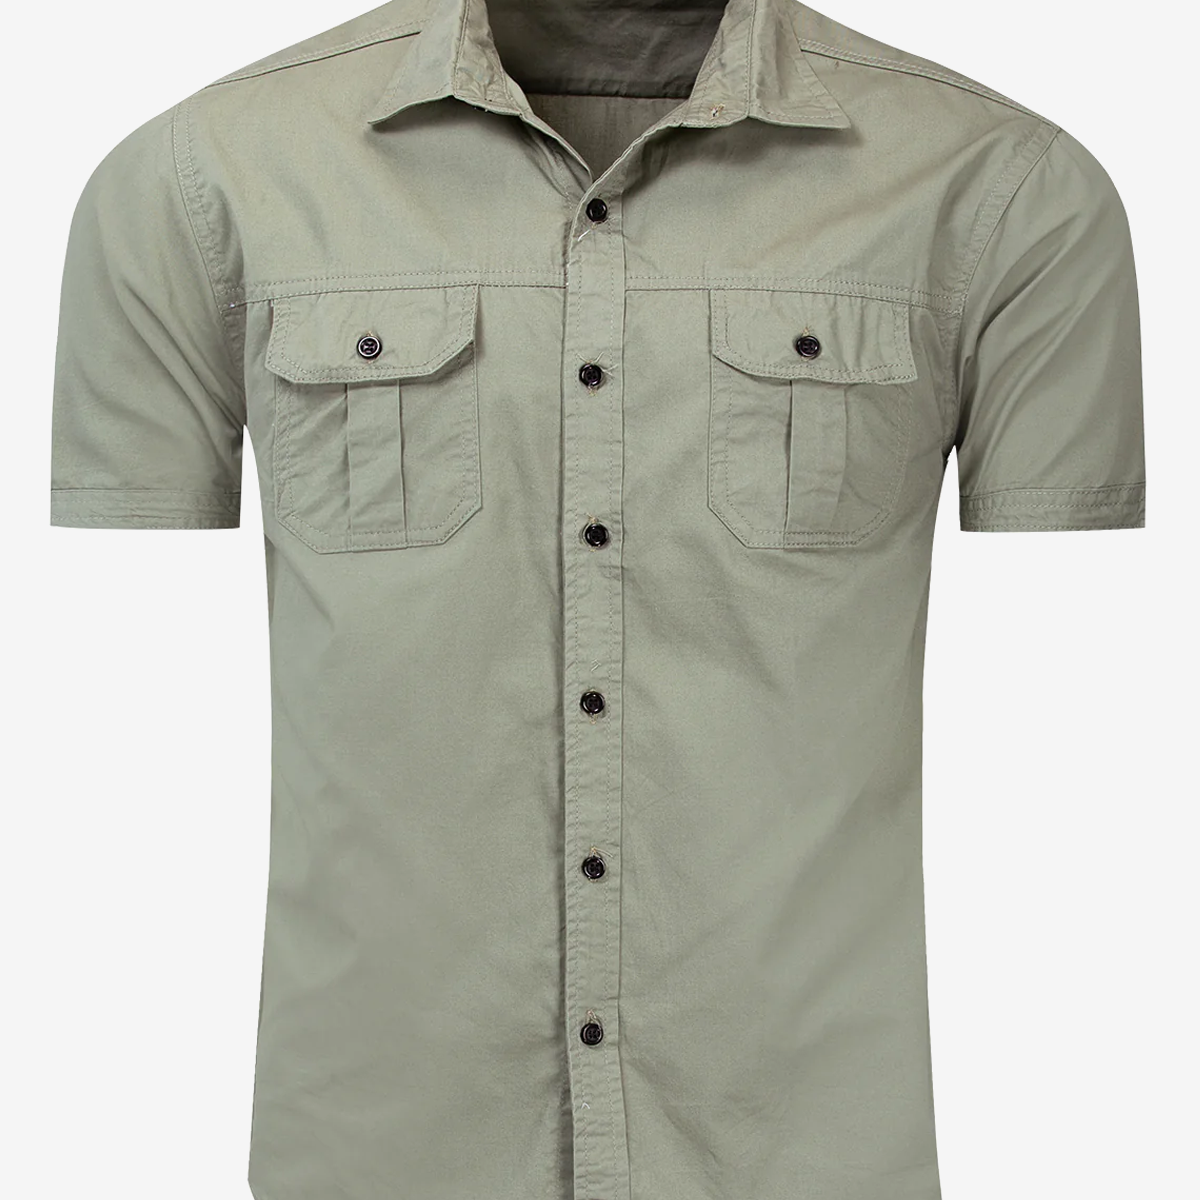 Men's Casual Outdoor Pocket Cotton Short Sleeve Shirt